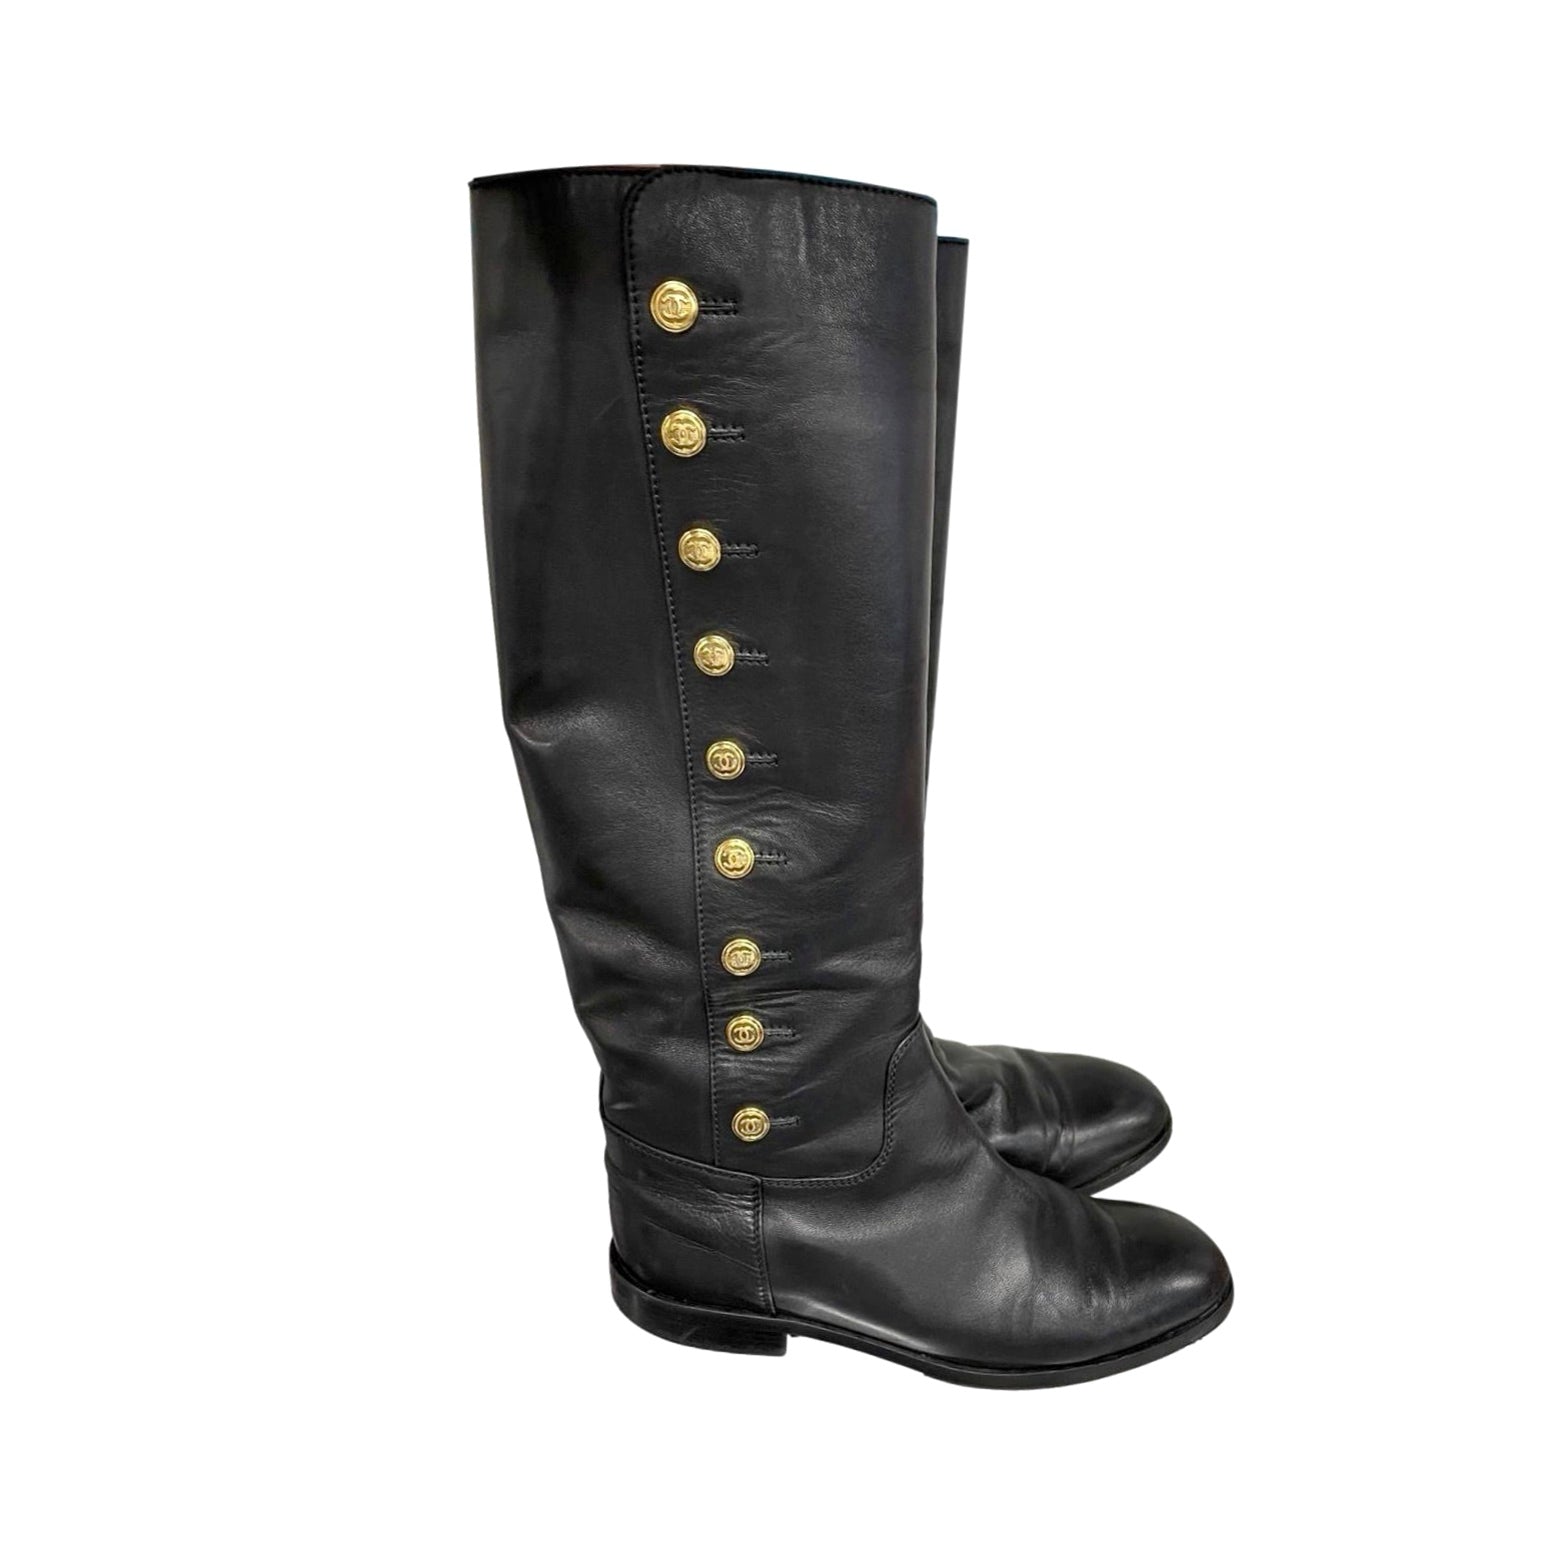 CHANEL Chanel Rubber Rain Boots Black